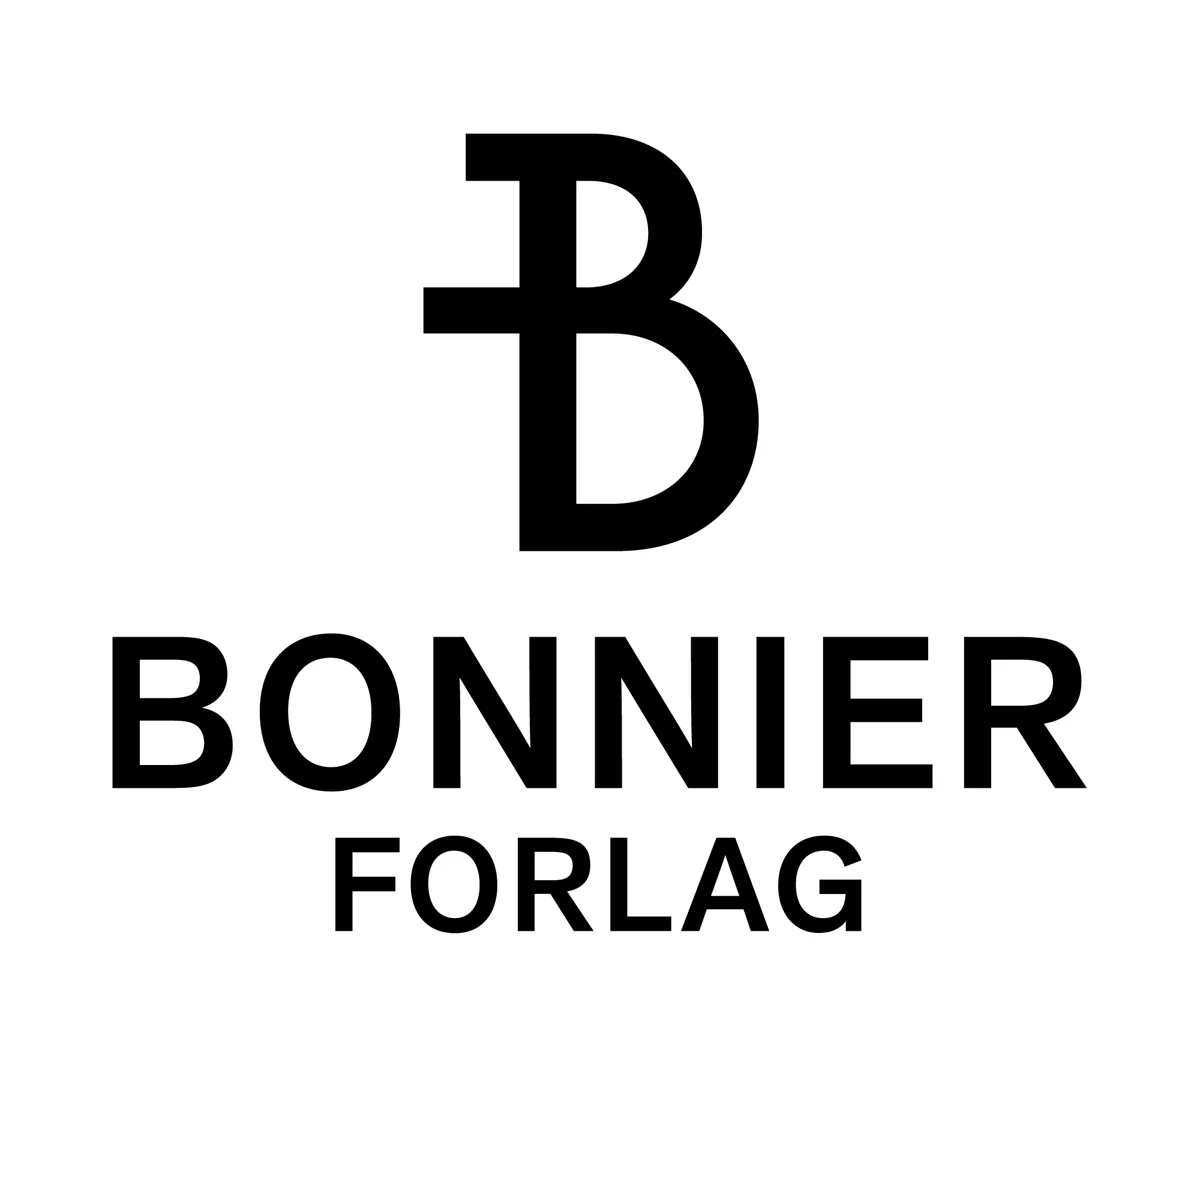 Bonnier-forlag-midtstilt-some-icon-pos.png